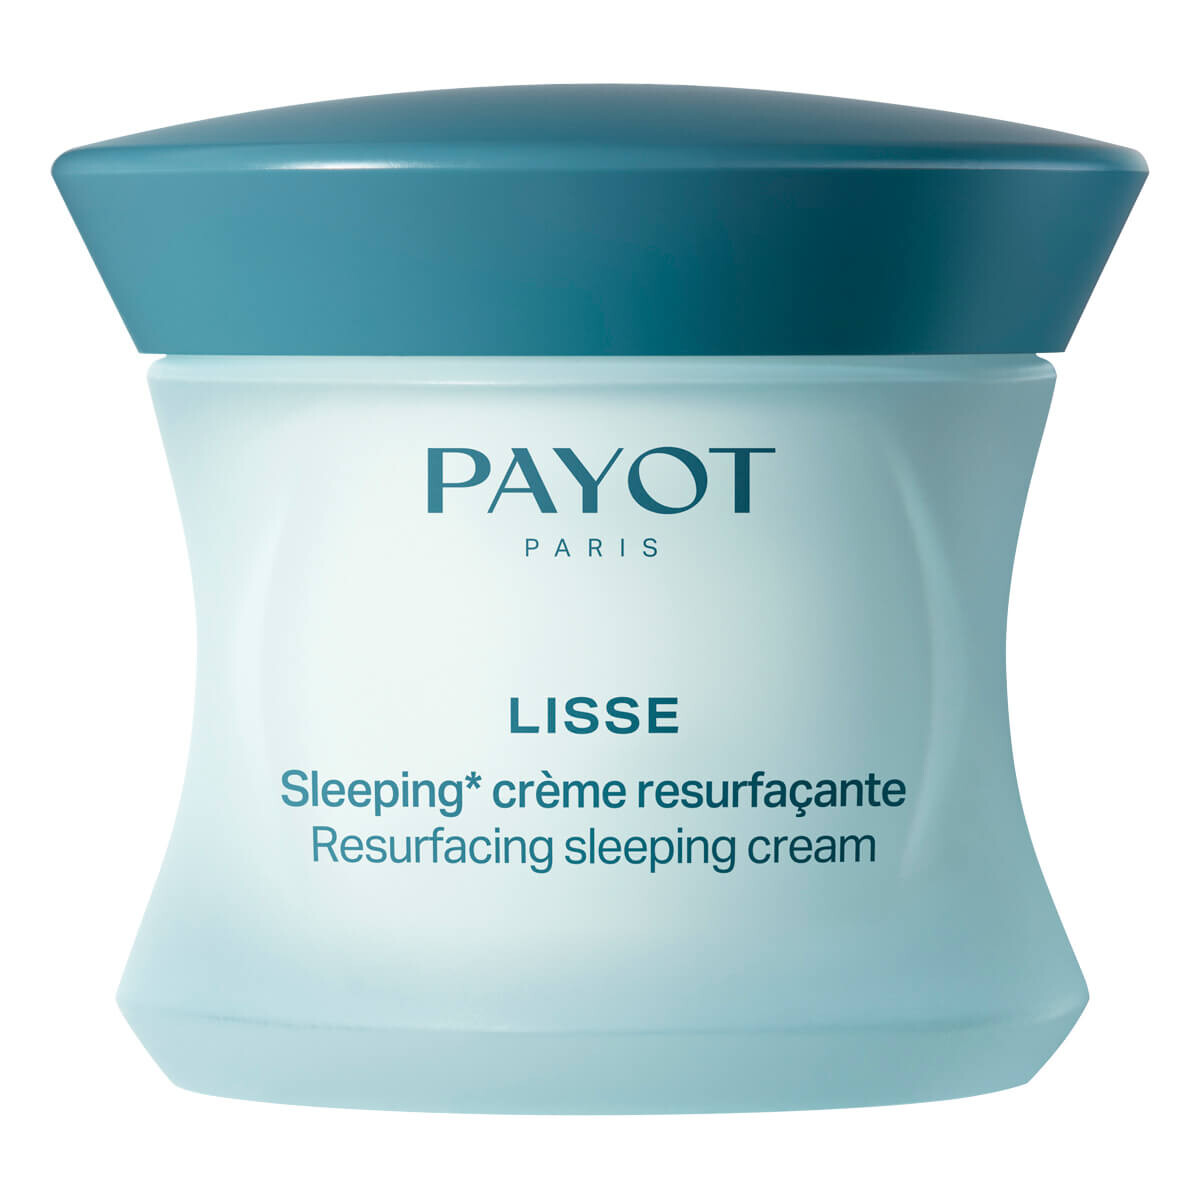 Se Payot Resurfacing Sleeping Cream, Lisse, 50 ml. hos Proshave